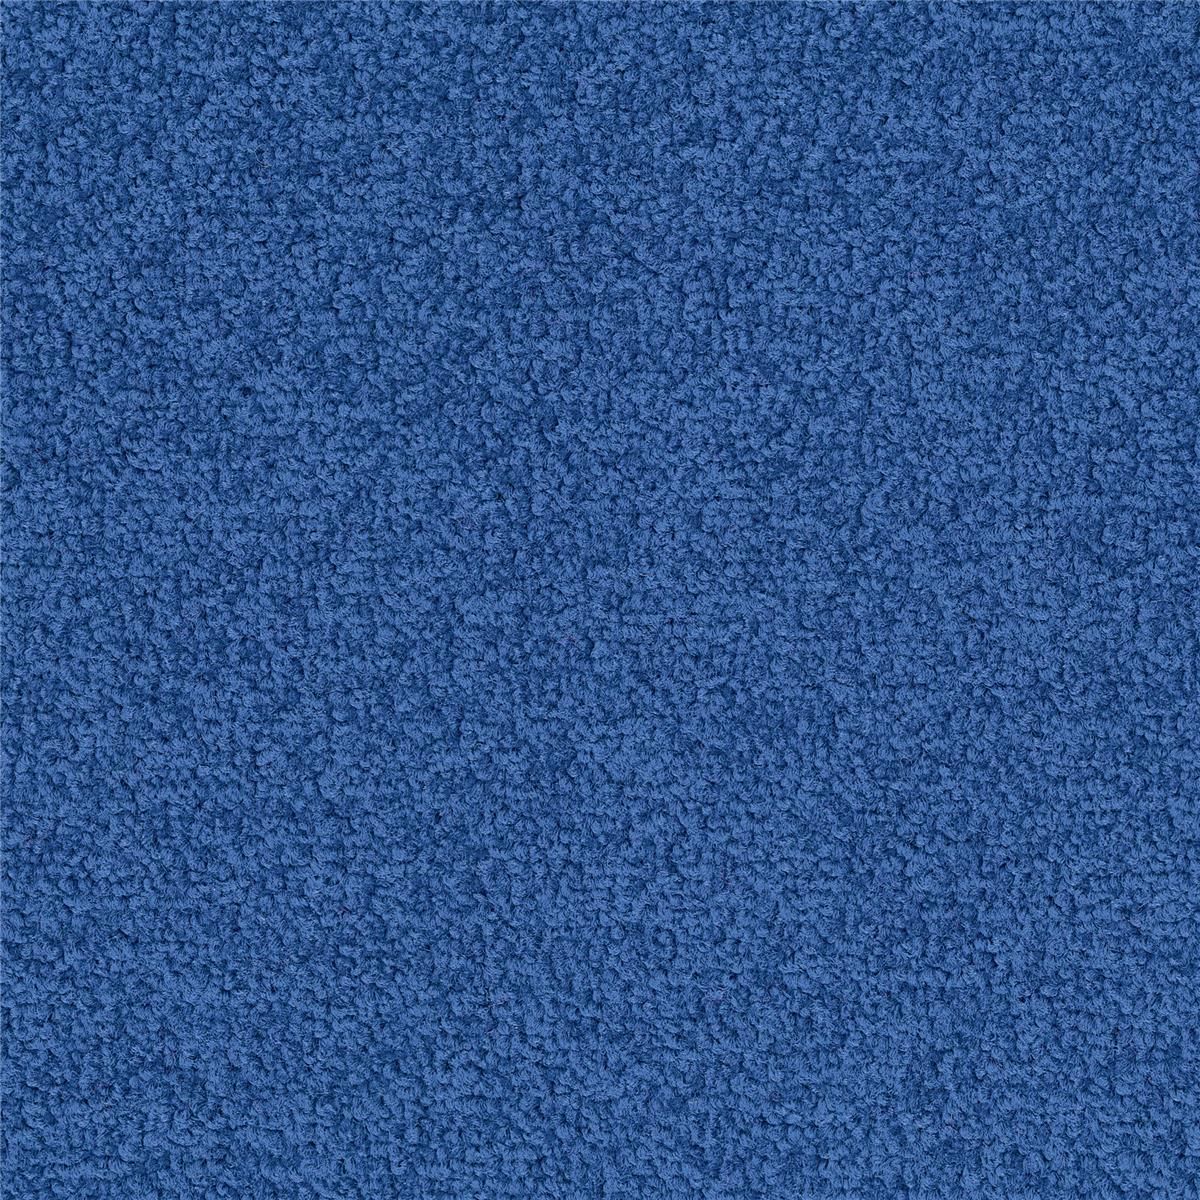 Teppichfliesen 50 x 50 cm Velours Palatino A072 8412 Blau Allover